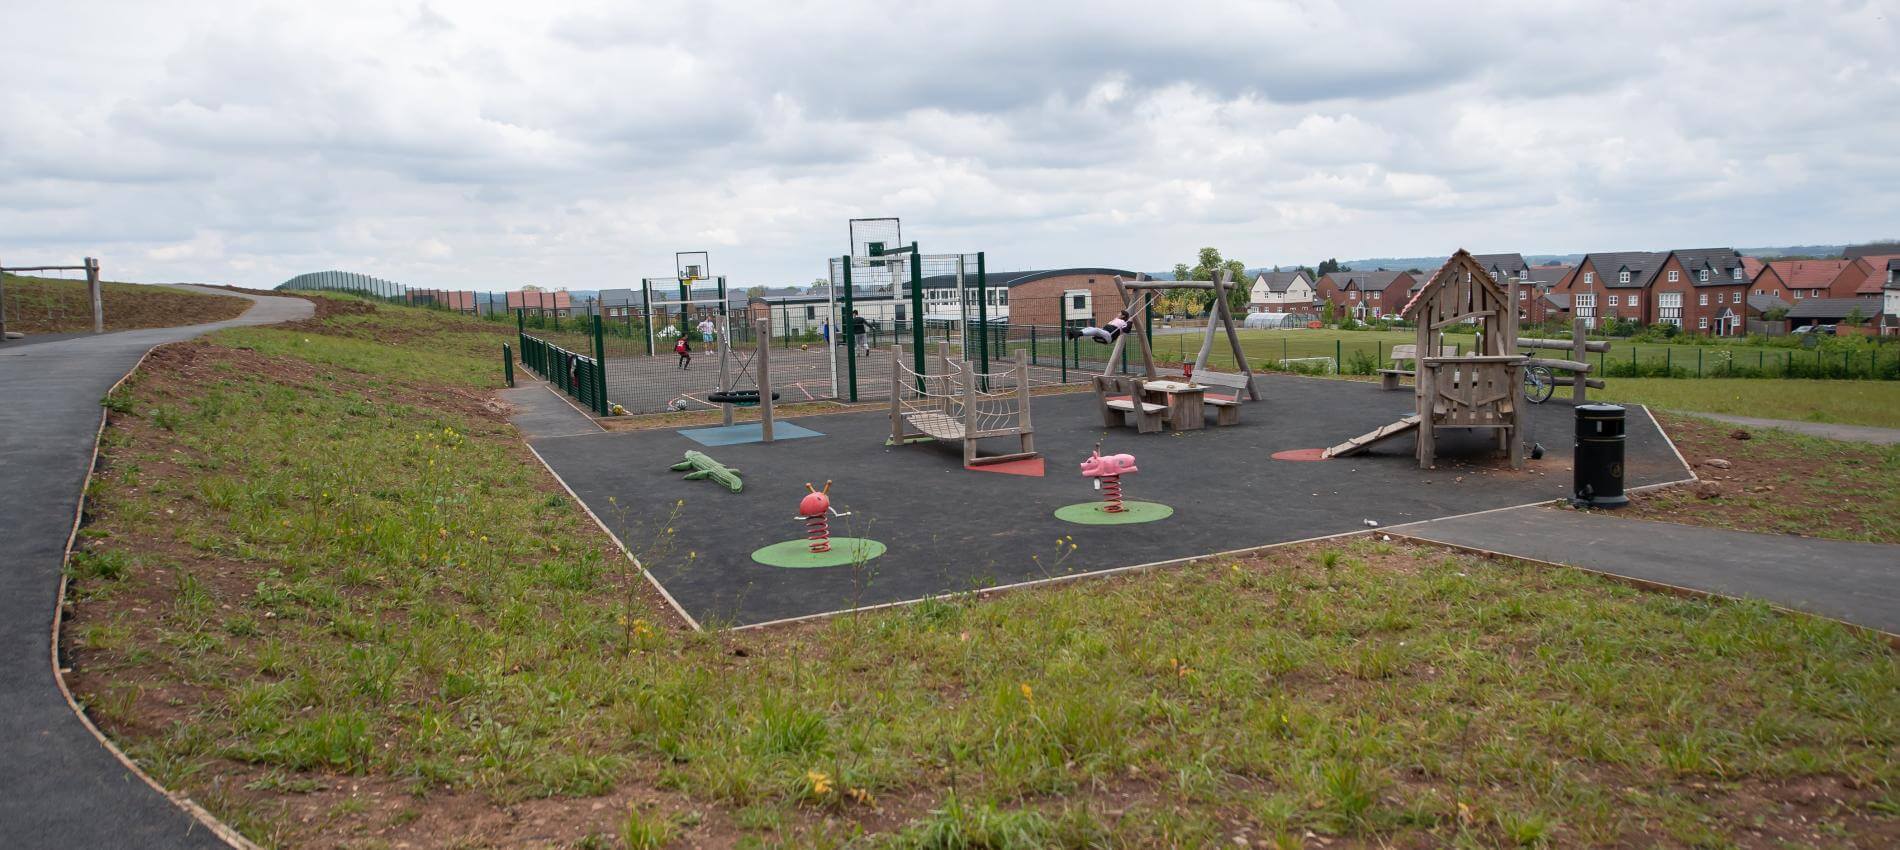 Play Area at Edwalton Fields Development